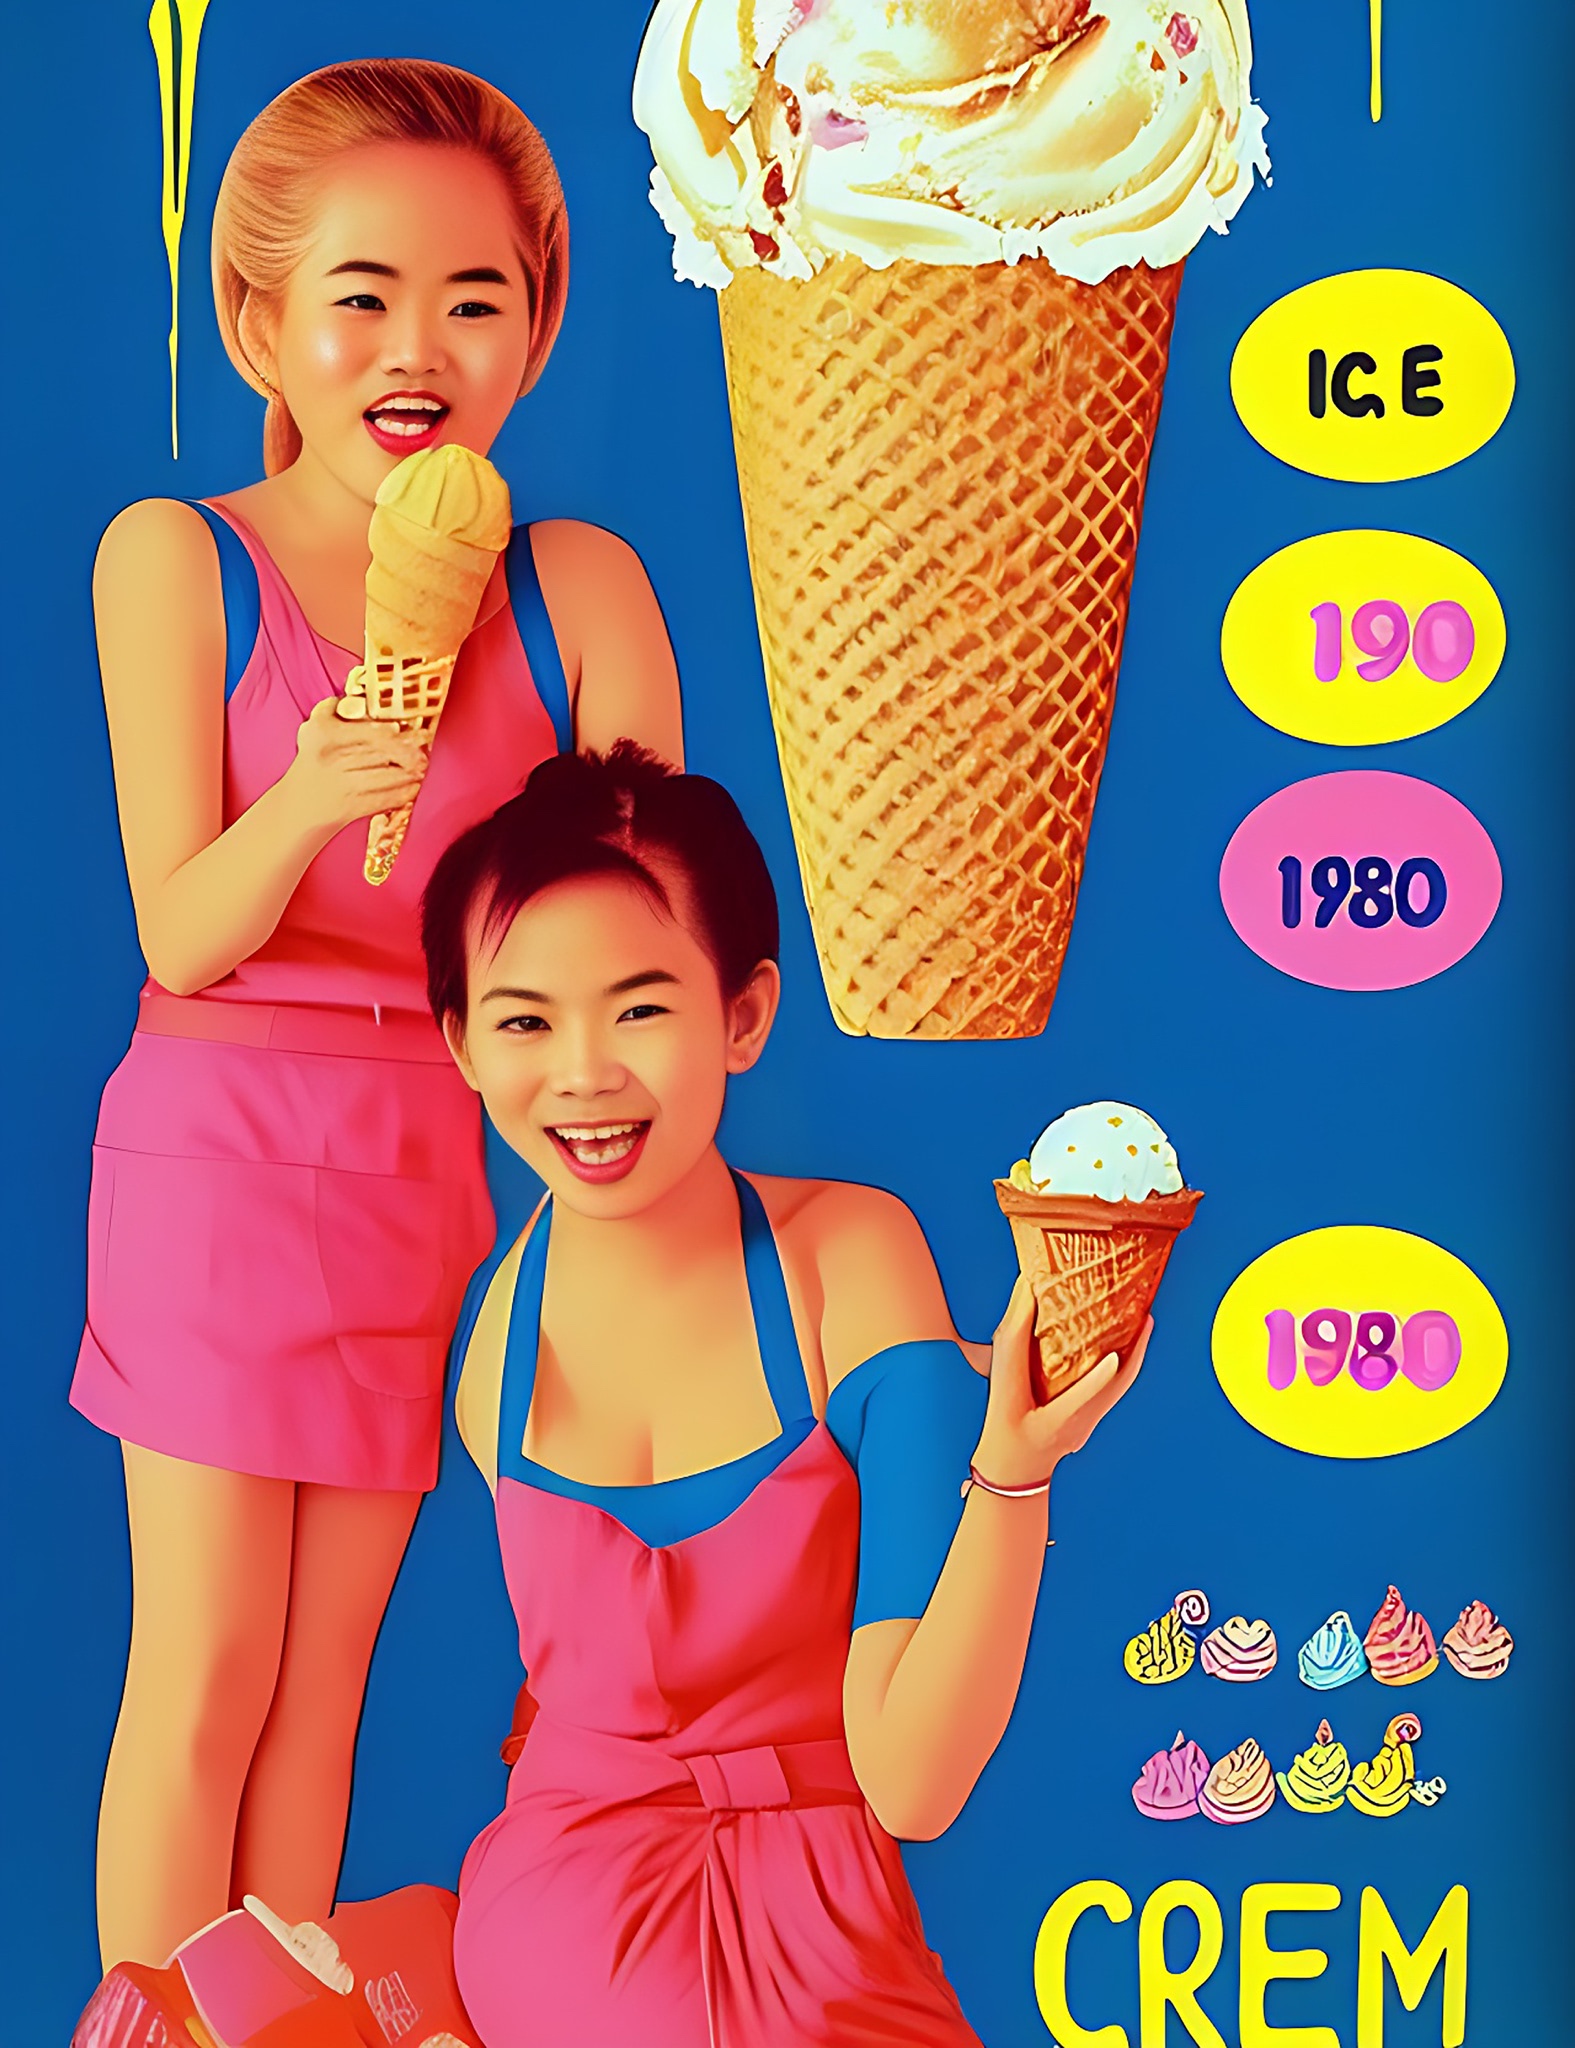 1980s-thai-poster-for-ice-cream-2